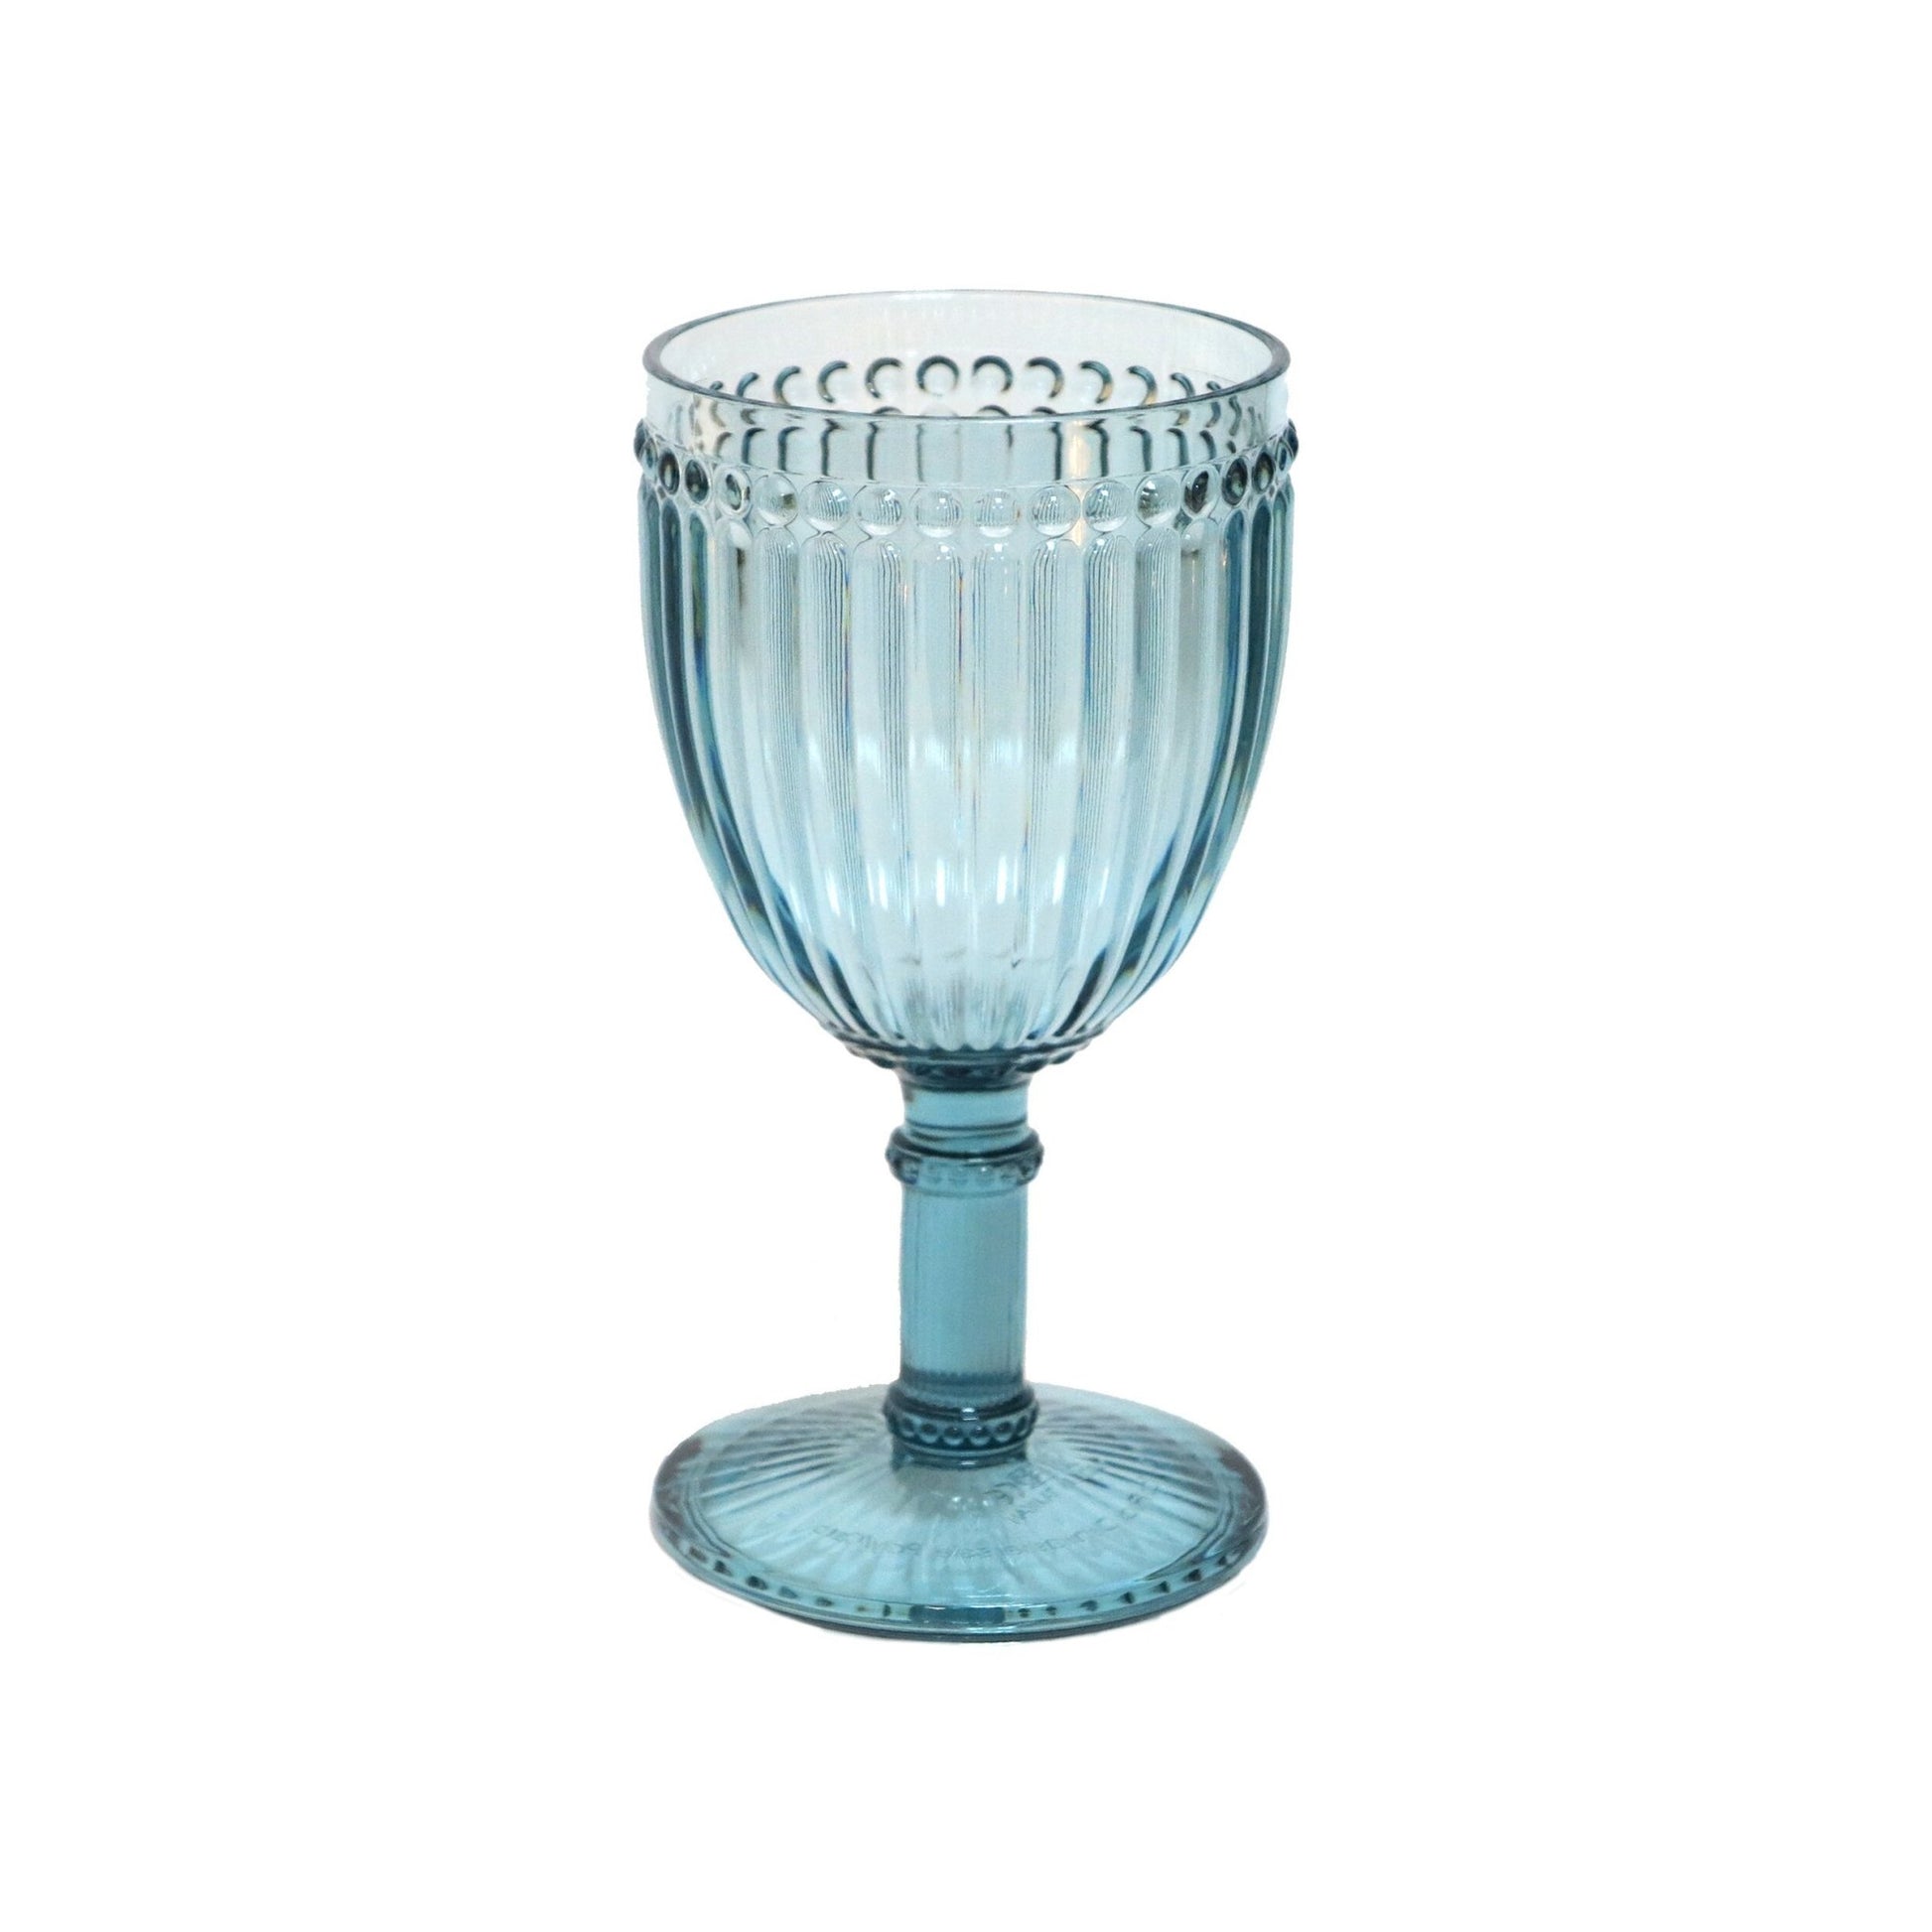 Teal Milano Polycarbonate Wine Glass - Royalties